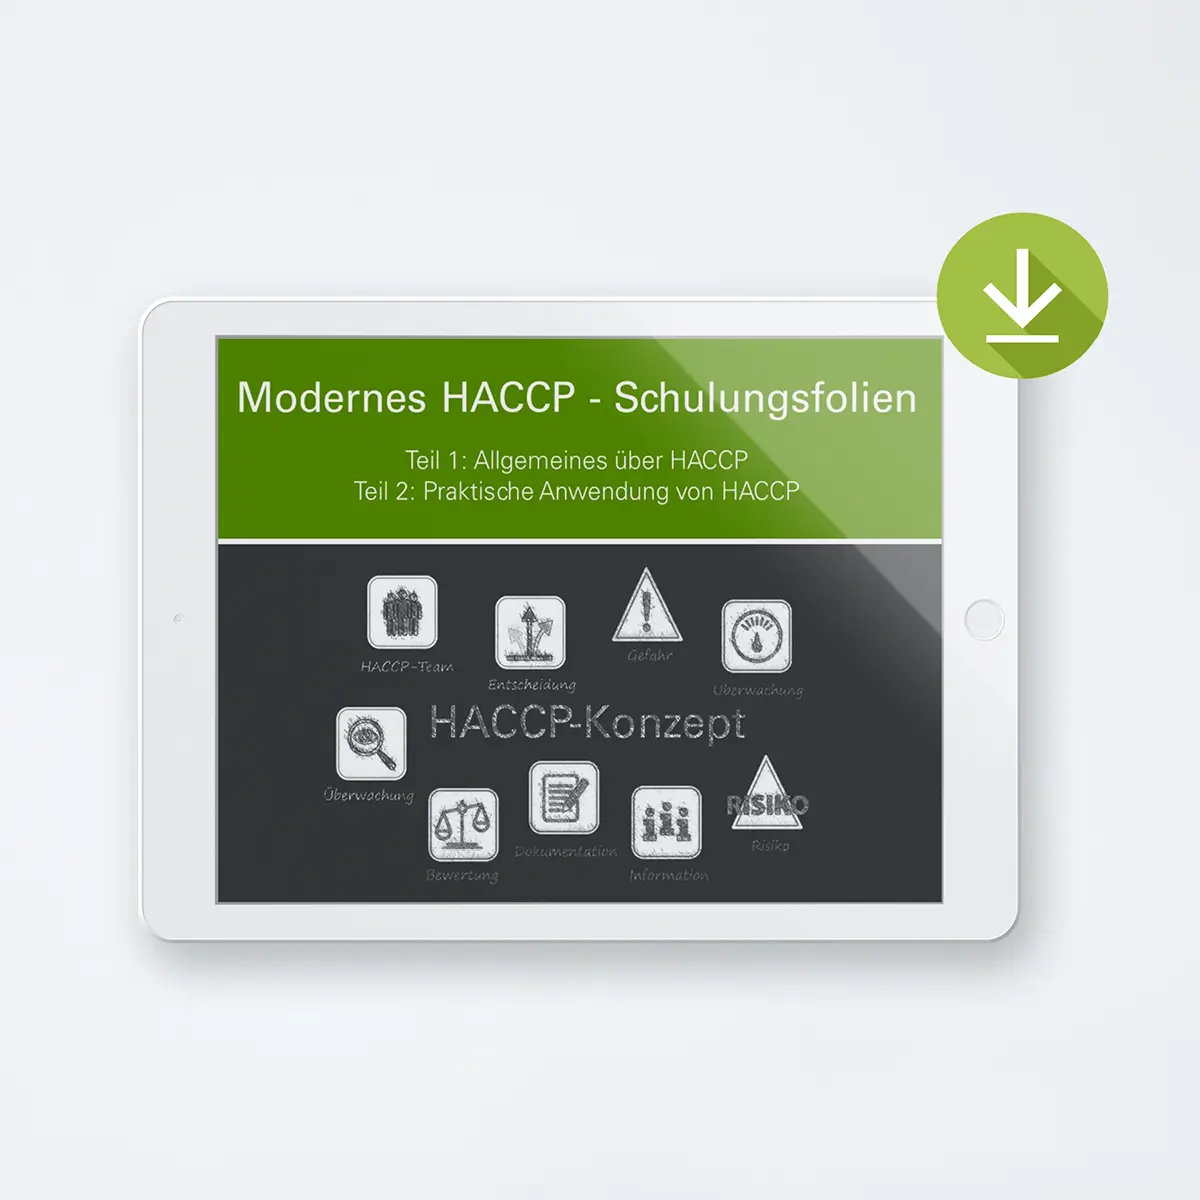 Schulungsfolien zu Modernes HACCP - Zum Download